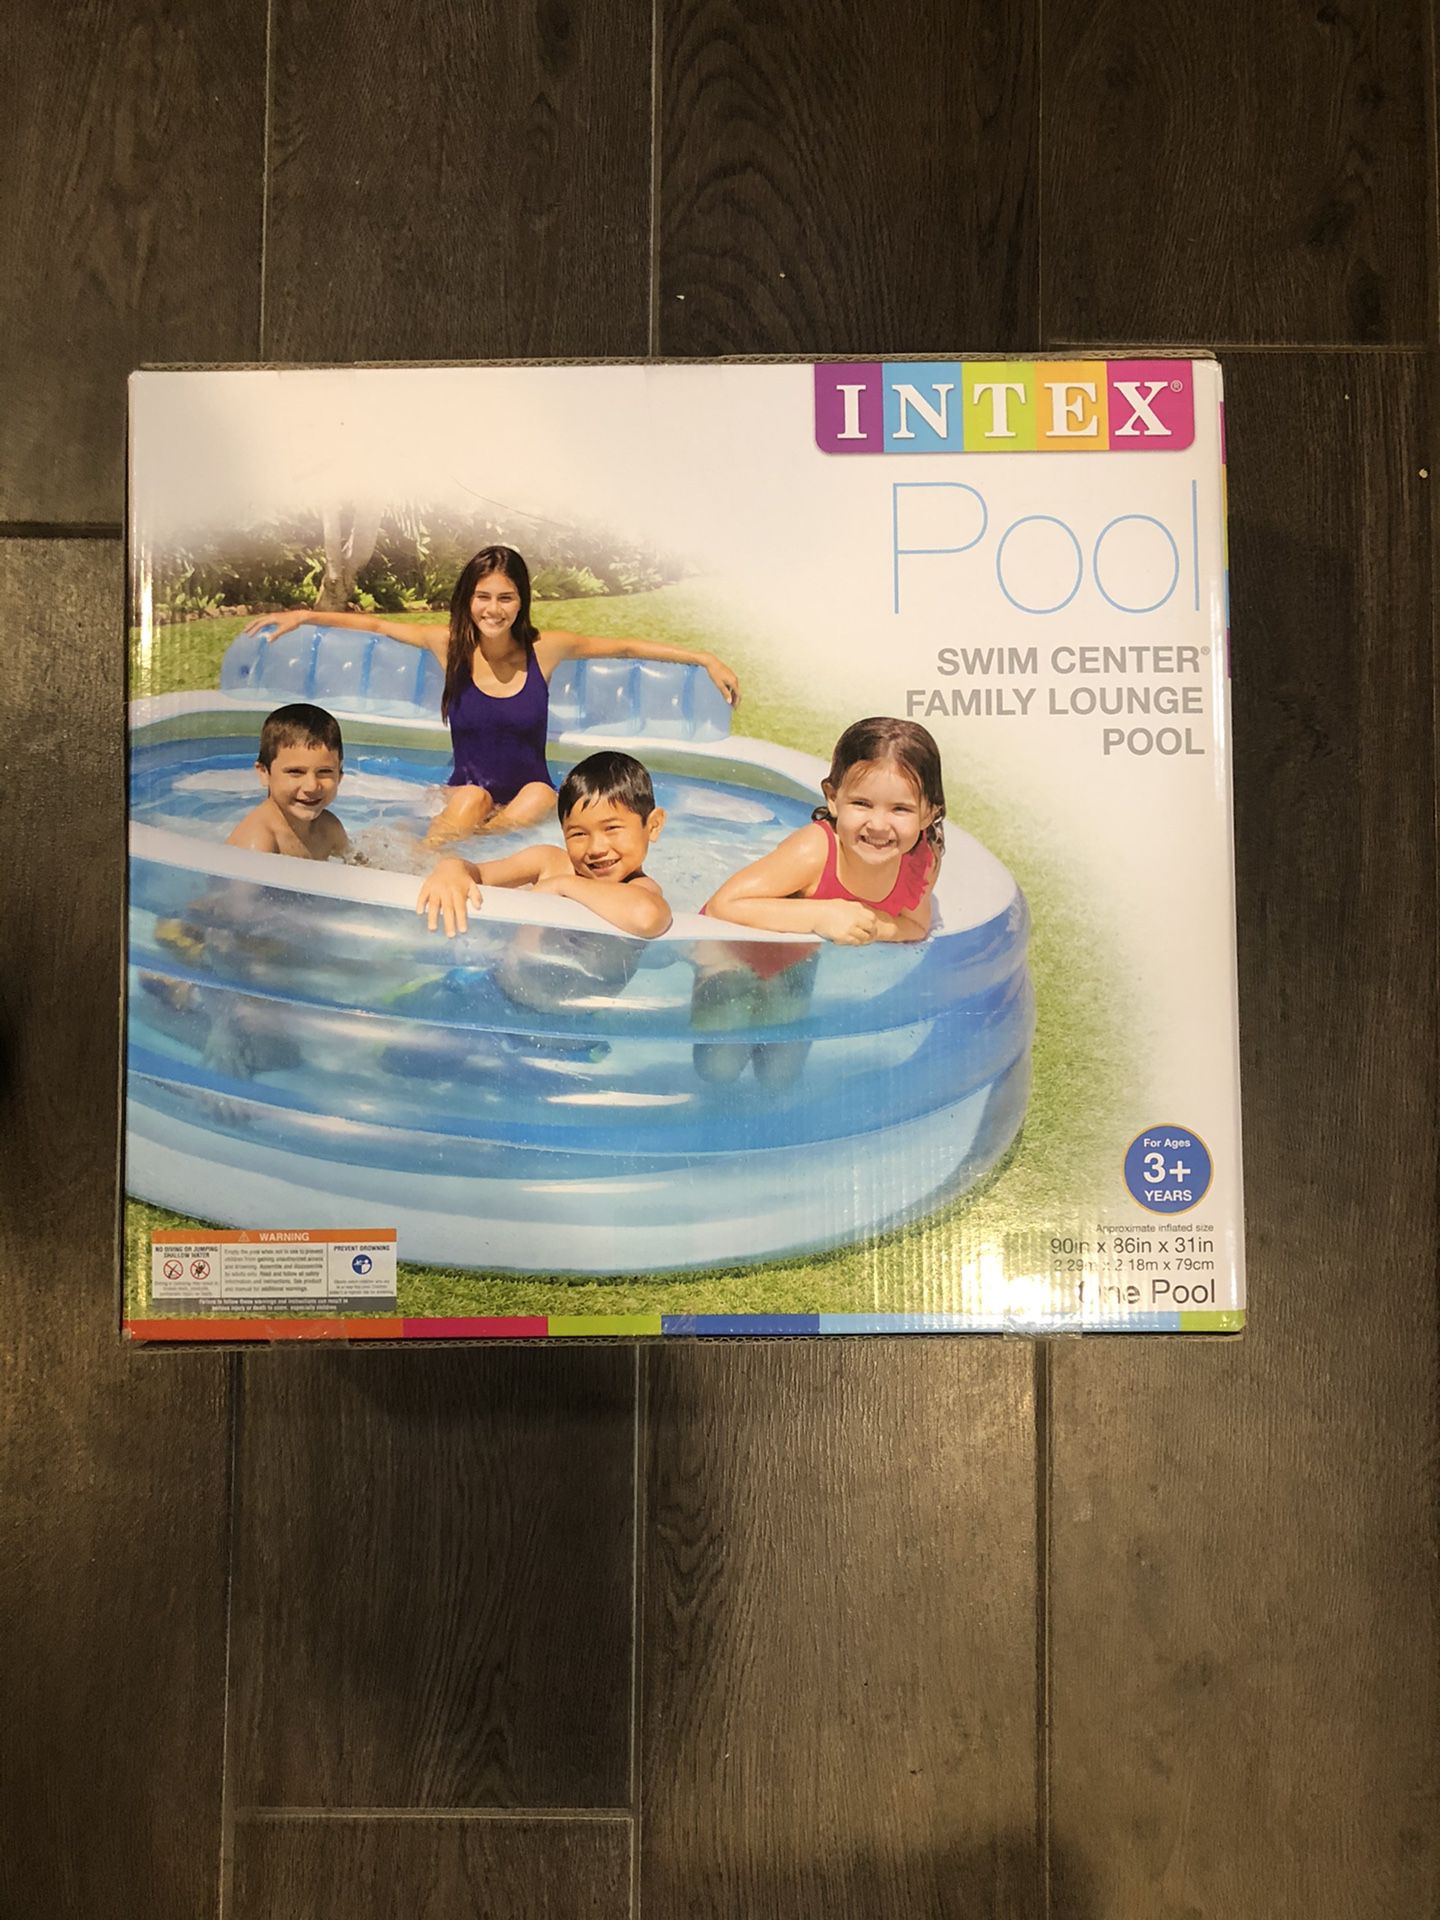 Intex swim center family lounge pool brand new! Will deliver!